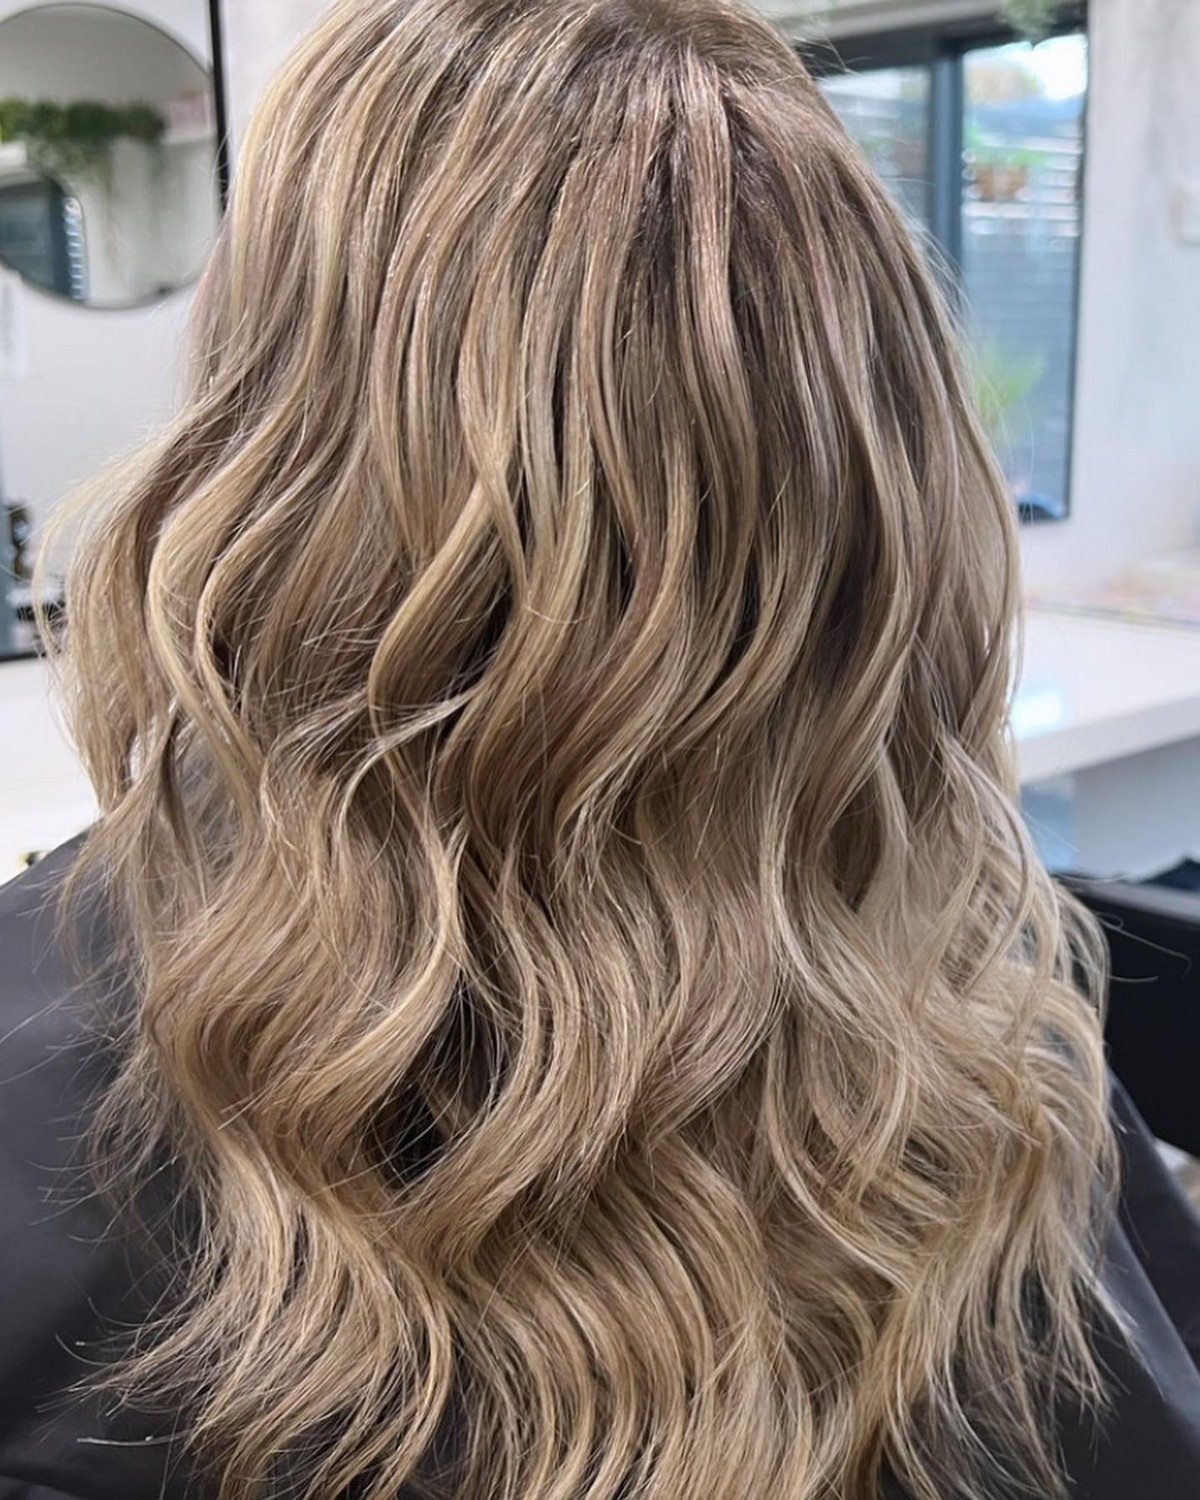 Medium-Length Blonde Hair And Root fade